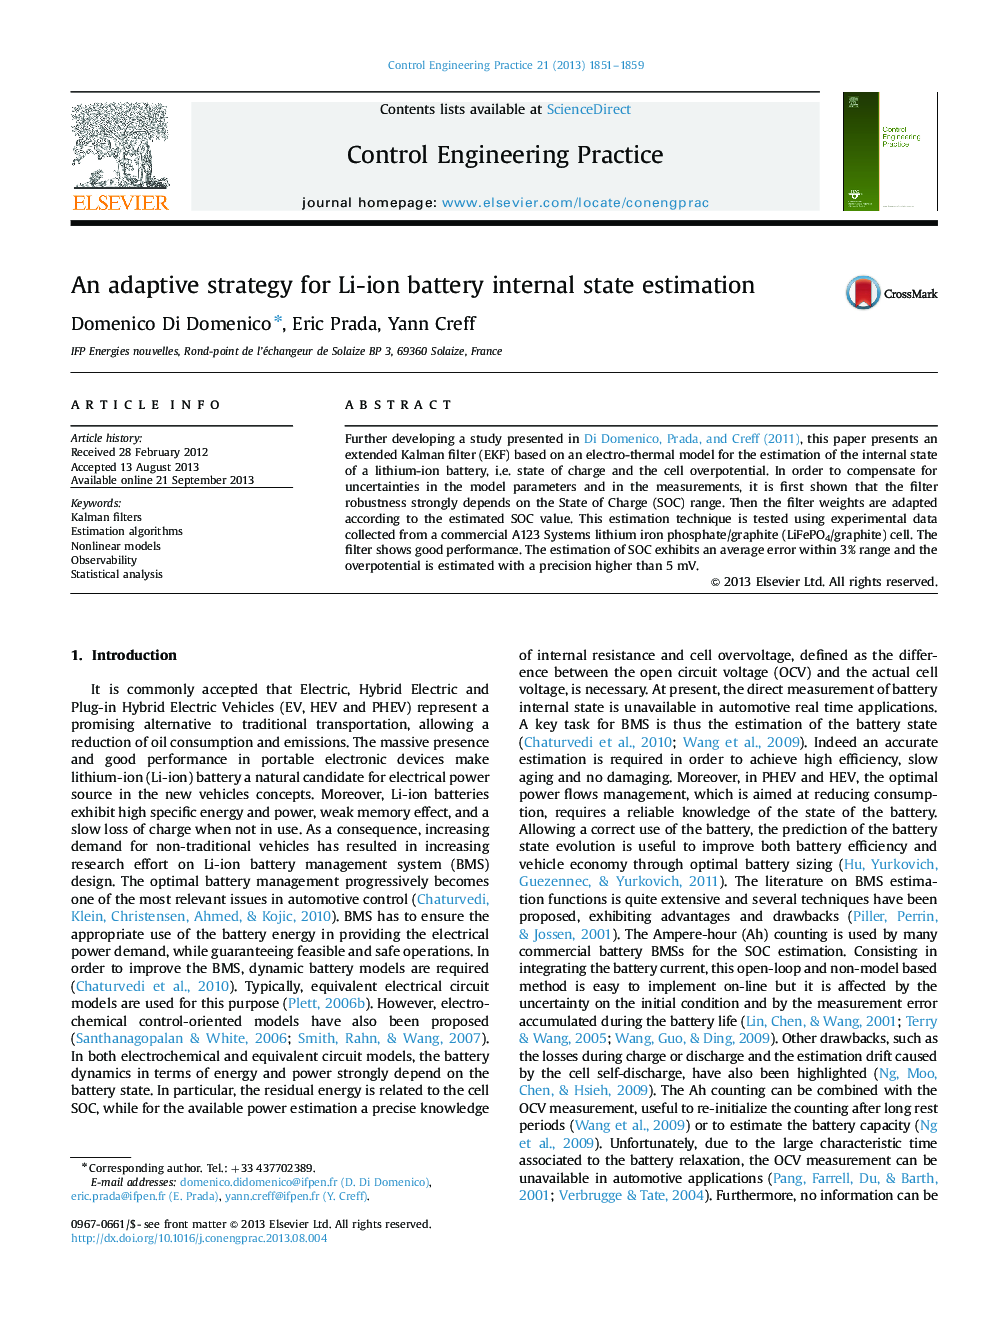 An adaptive strategy for Li-ion battery internal state estimation